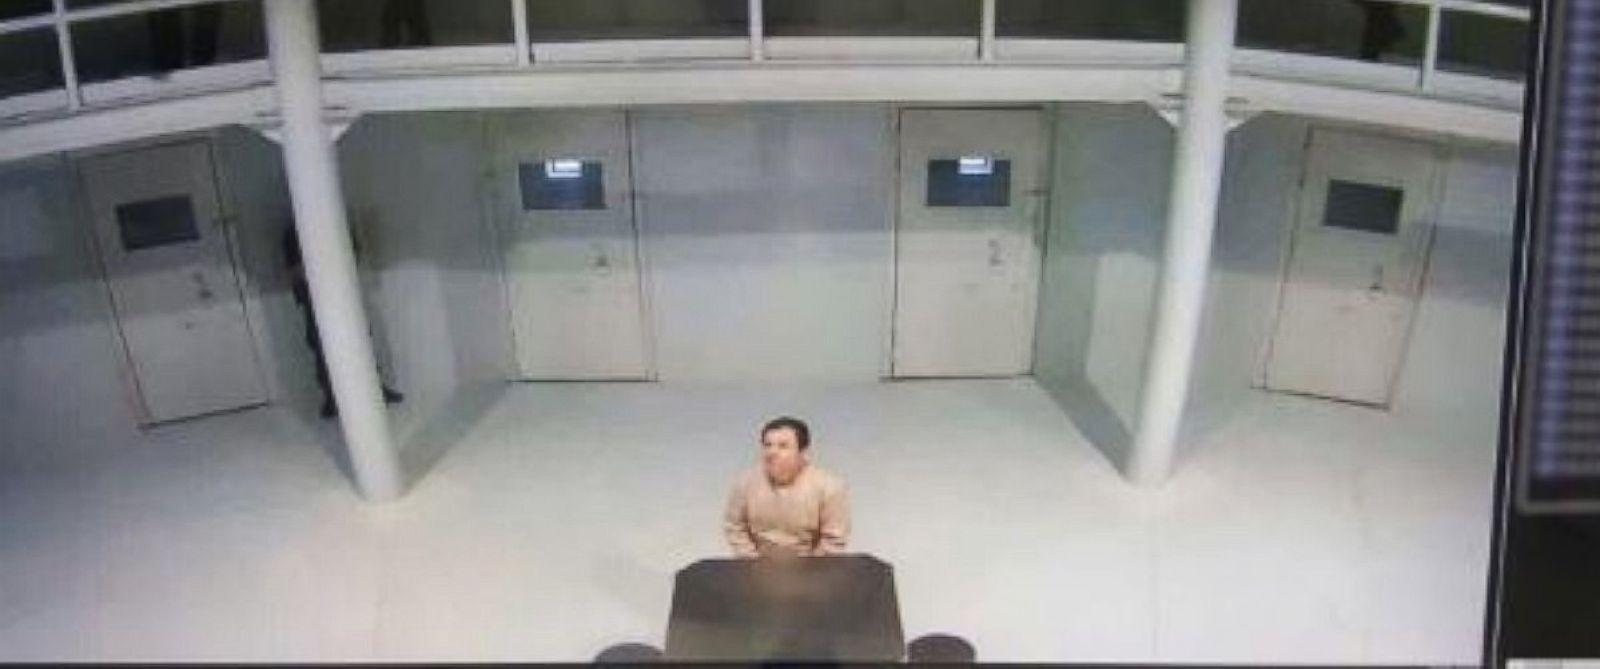 Mexican Politician Tweets El Chapo Prison Photo to Dispel Rumors of an Escape